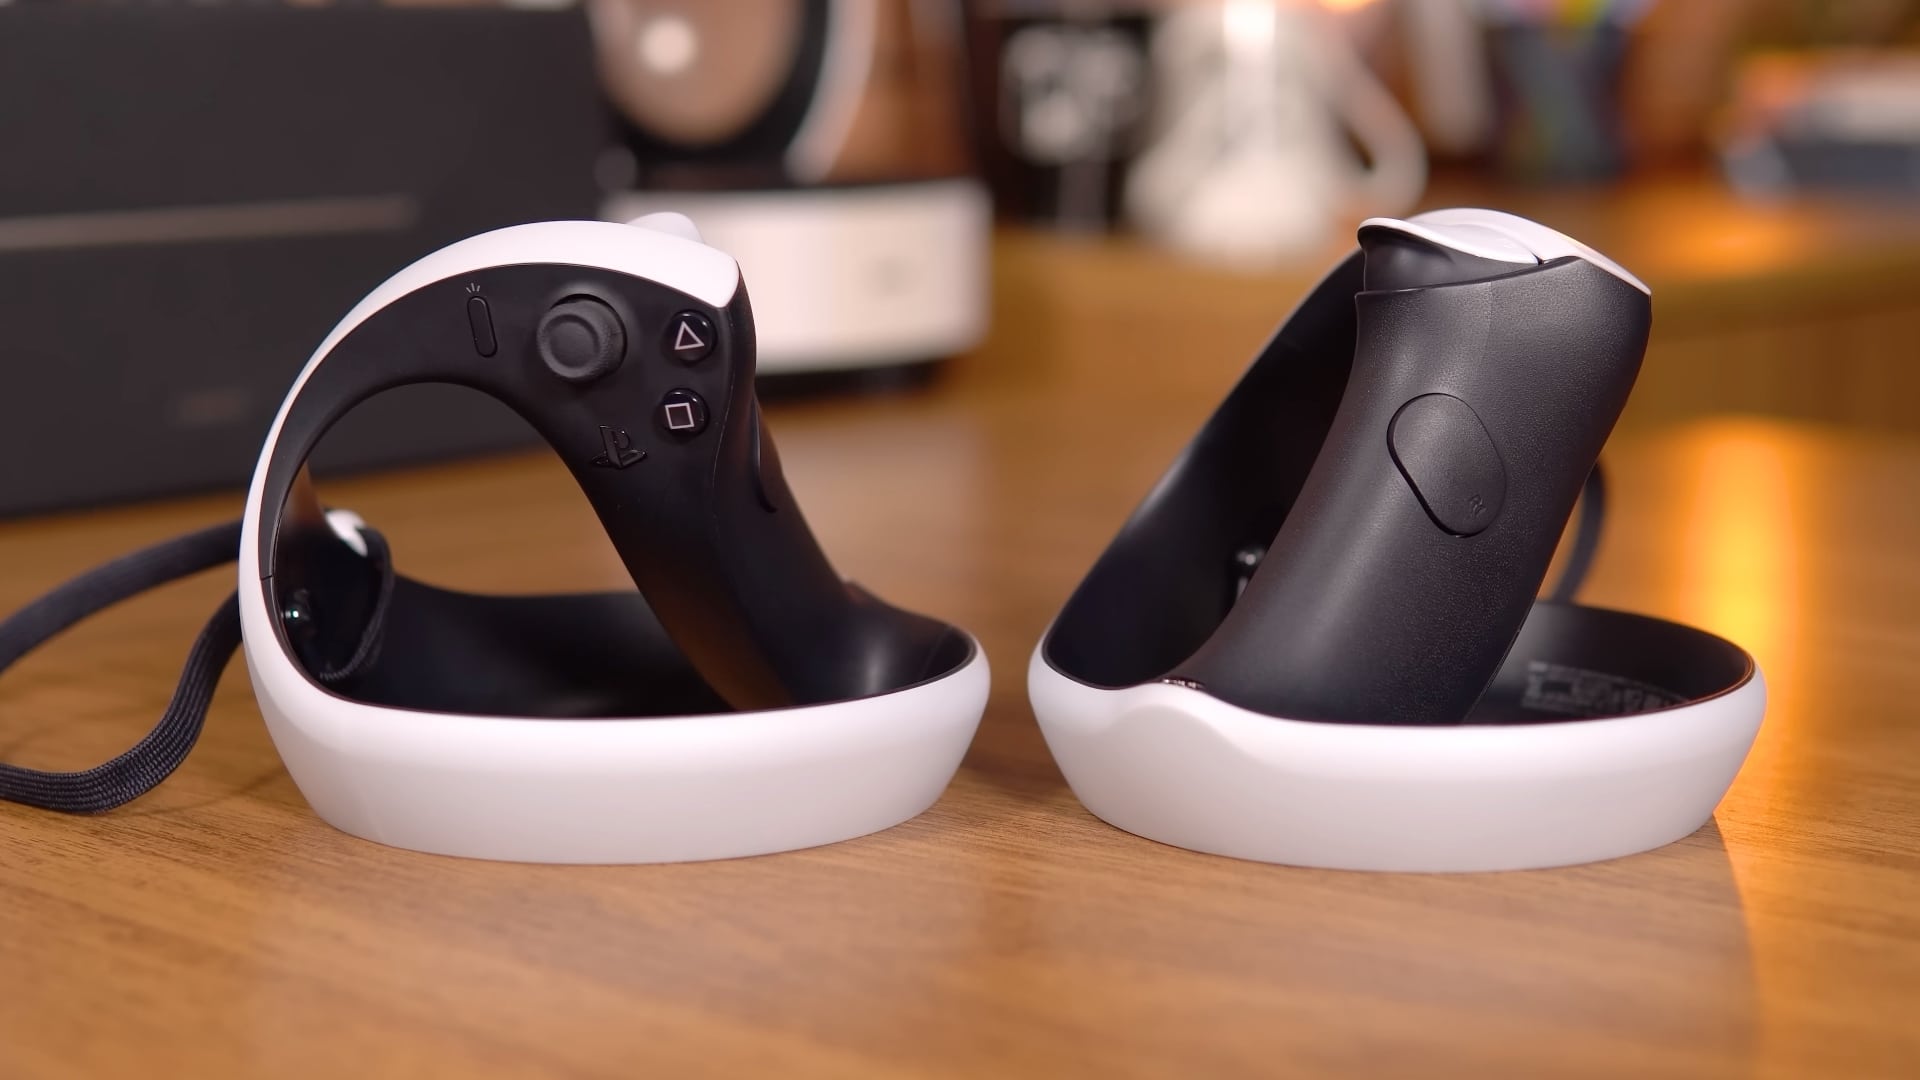 Análise: vale a pena comprar o PlayStation VR2? - Ping Baixo